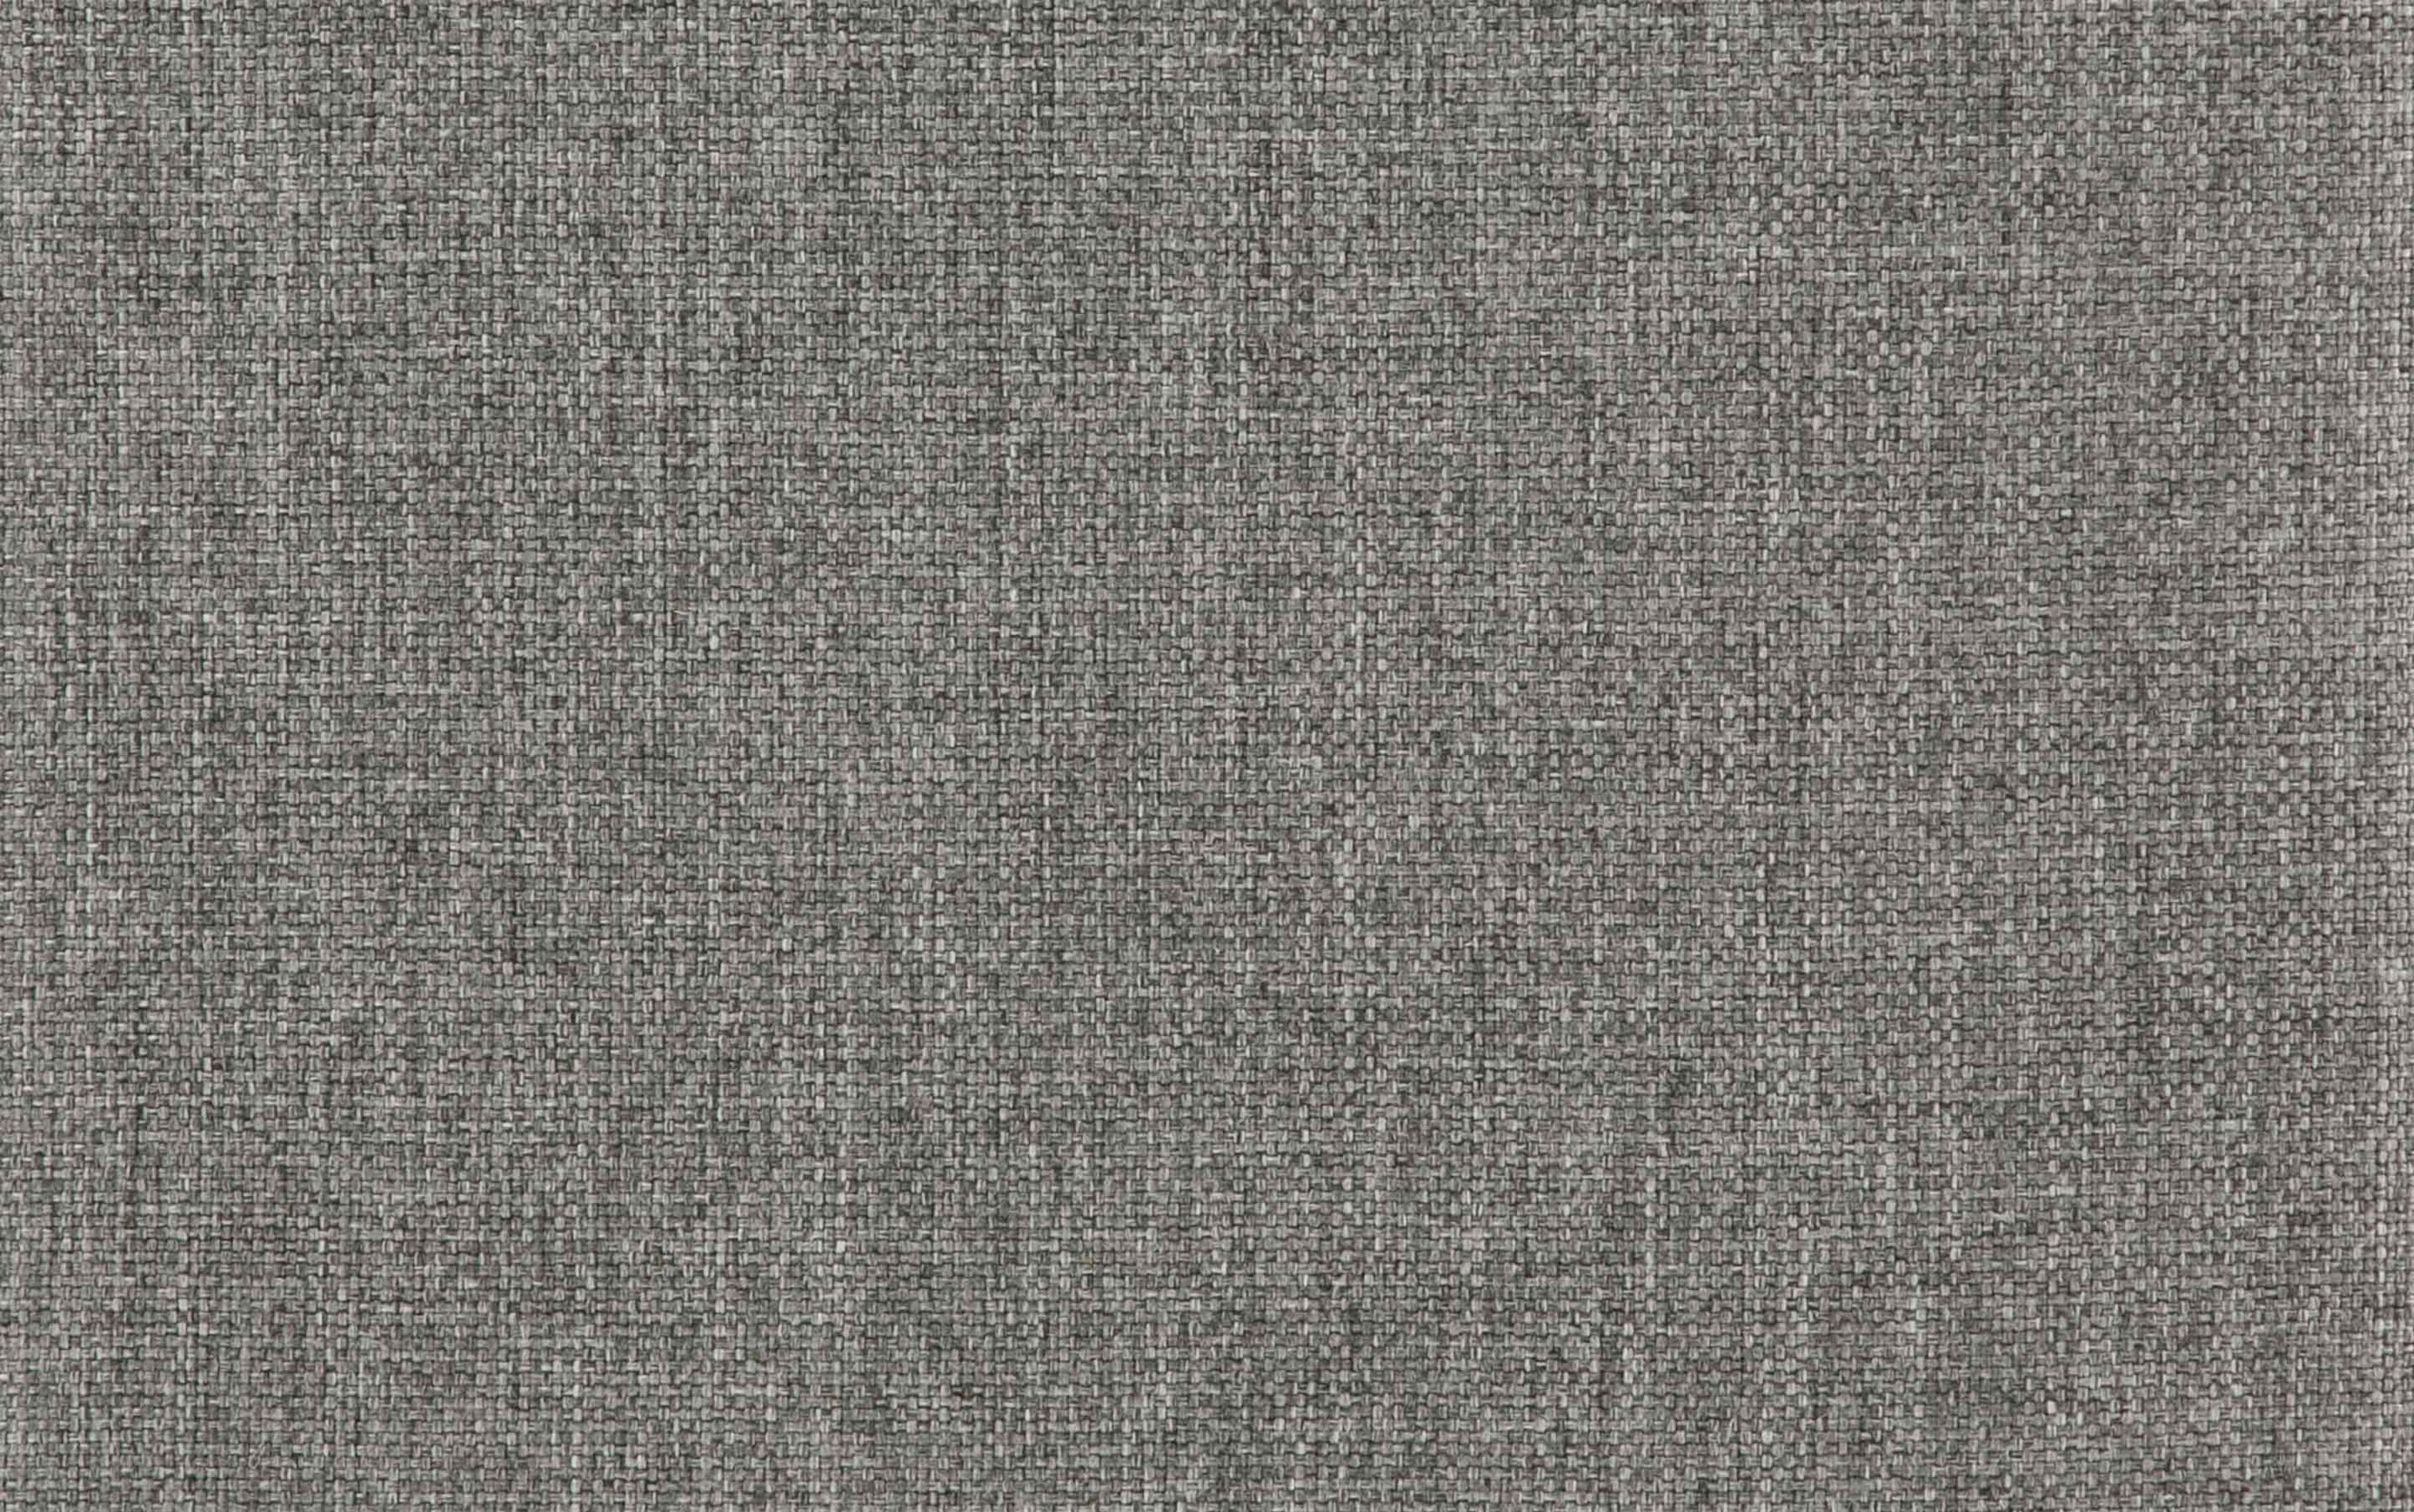 Grey Linen Style Fabric | Milltown Footstool Small Ottoman Bench